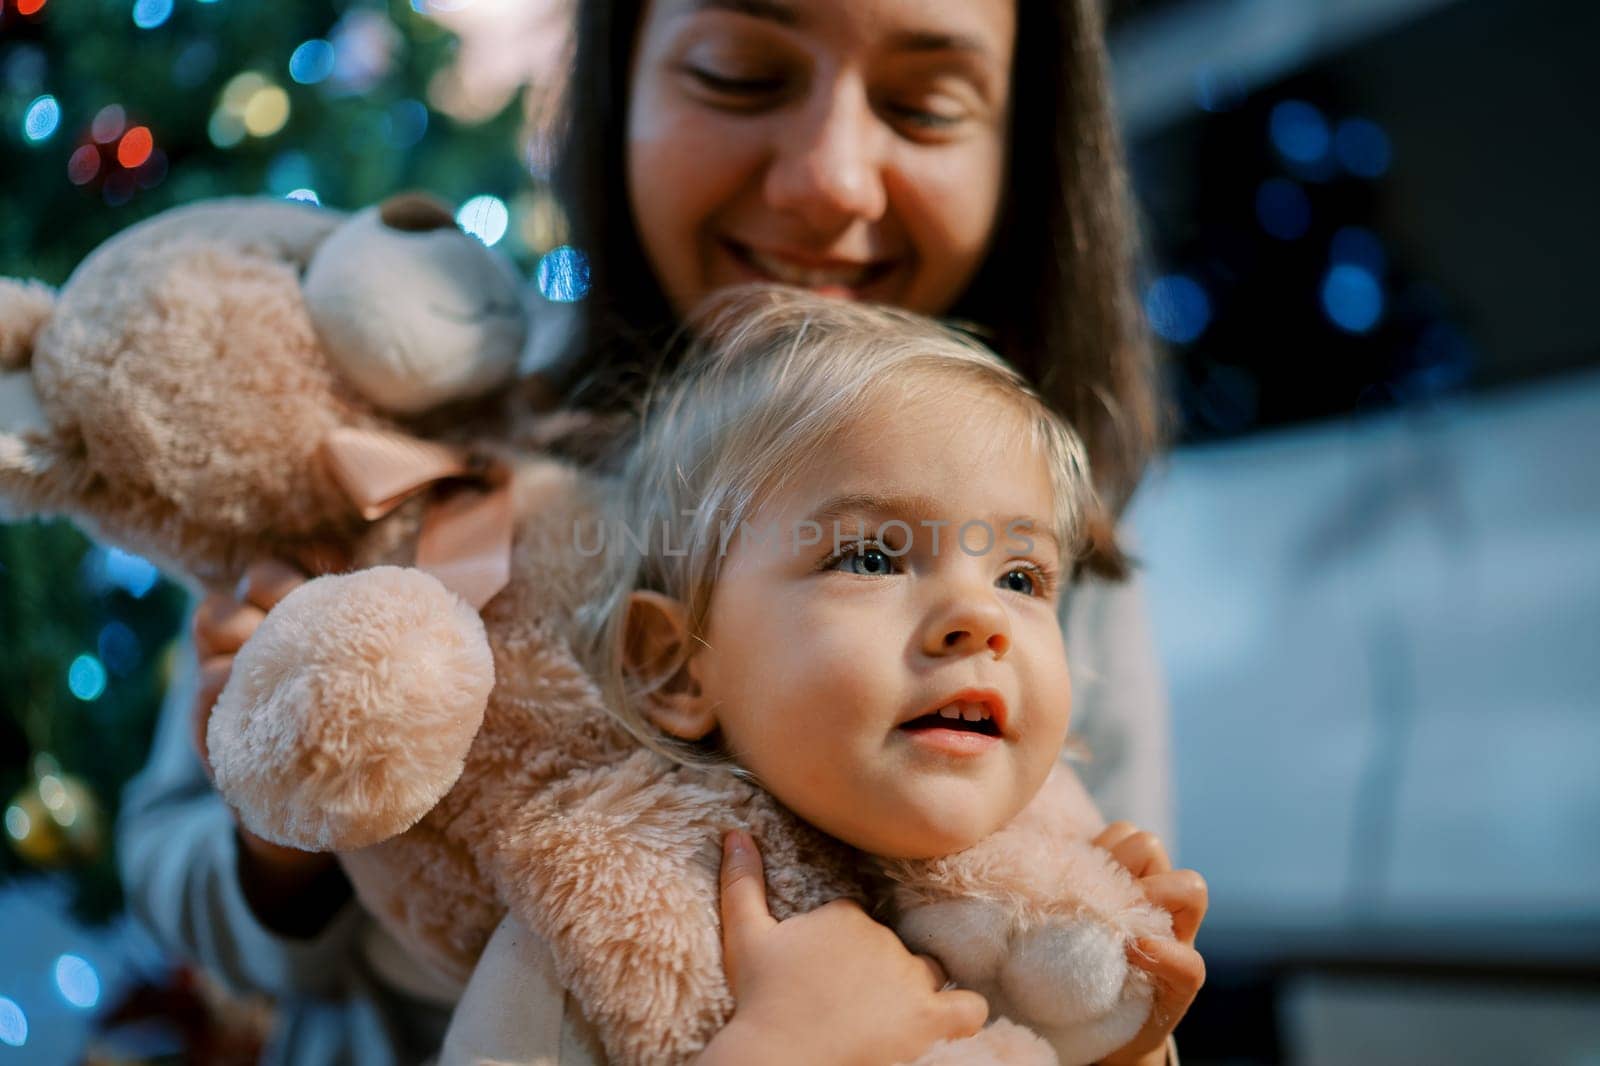 Mom put a teddy bear on the neck of a little girl near the Christmas tree. High quality photo